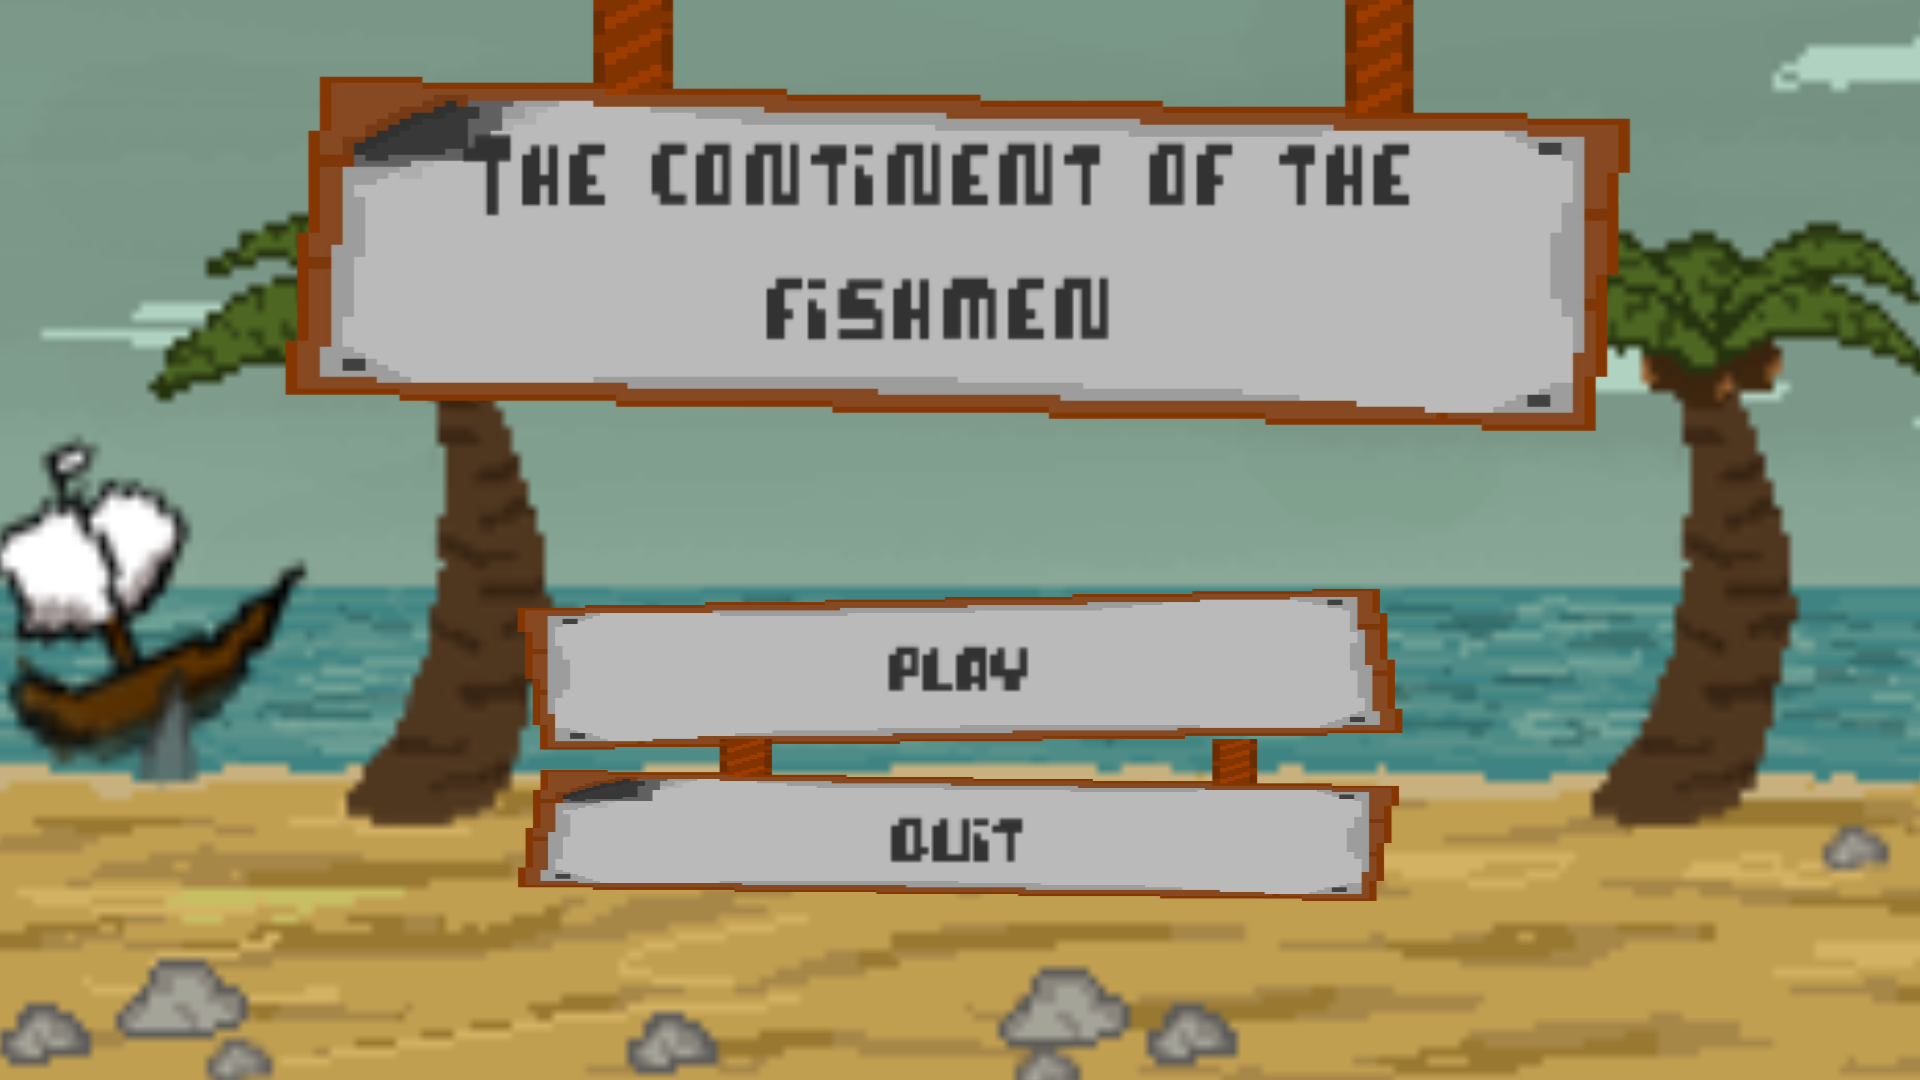 The continent of The Fishmen